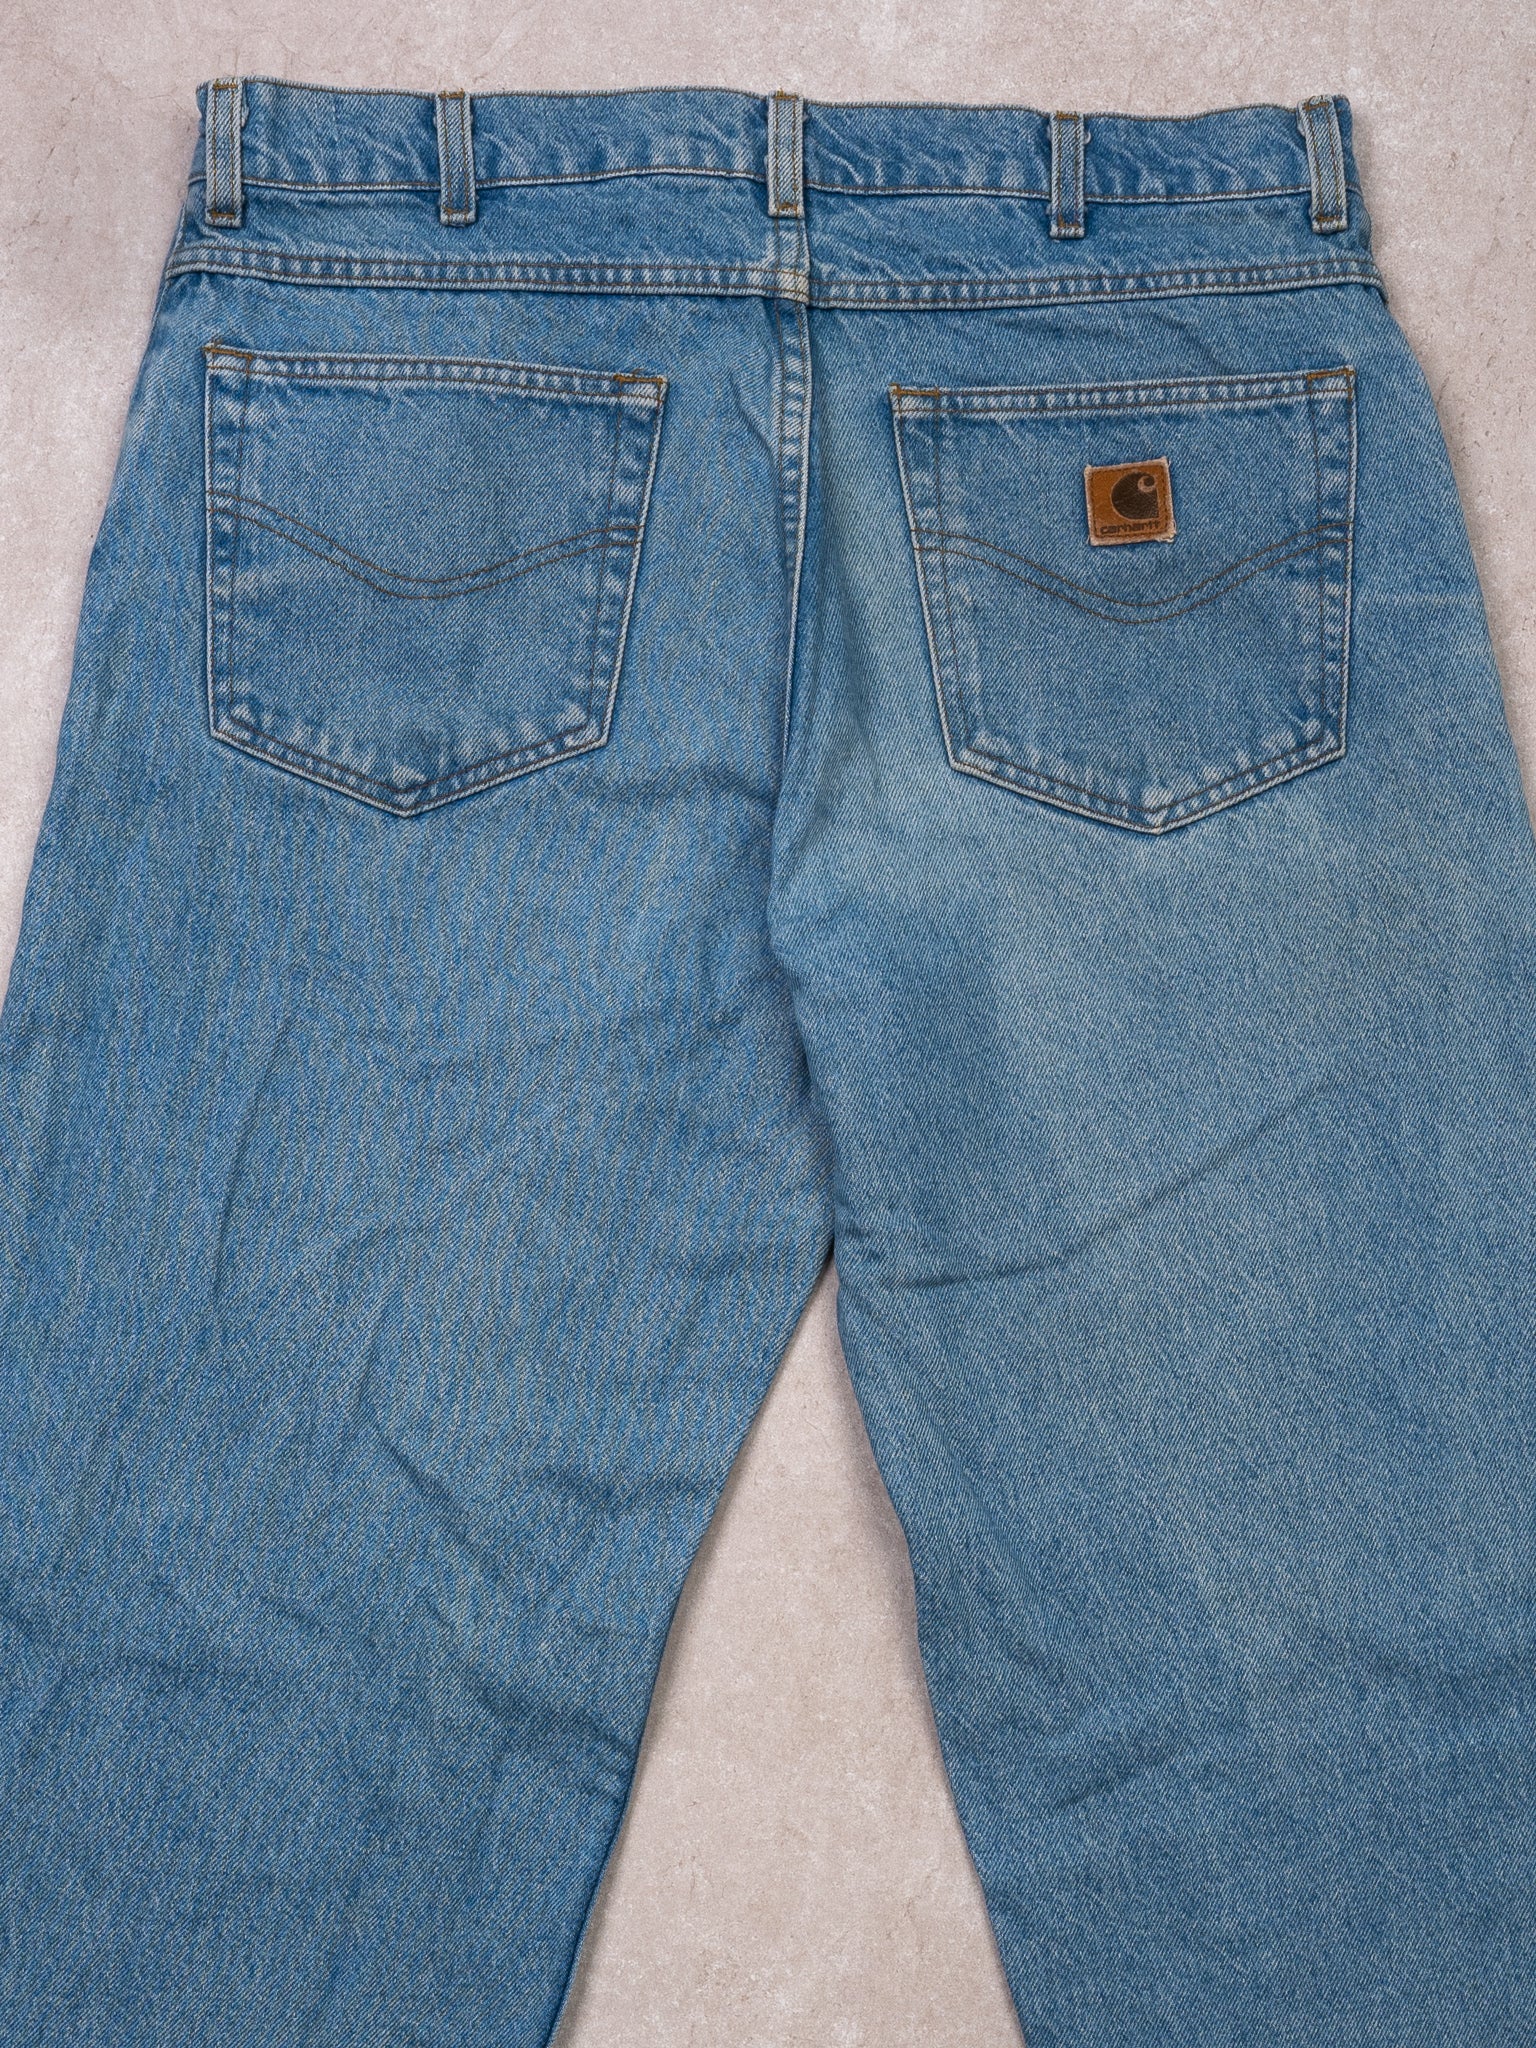 Vintage Light Blue Carhartt Straight Leg Jeans (34 x 32)